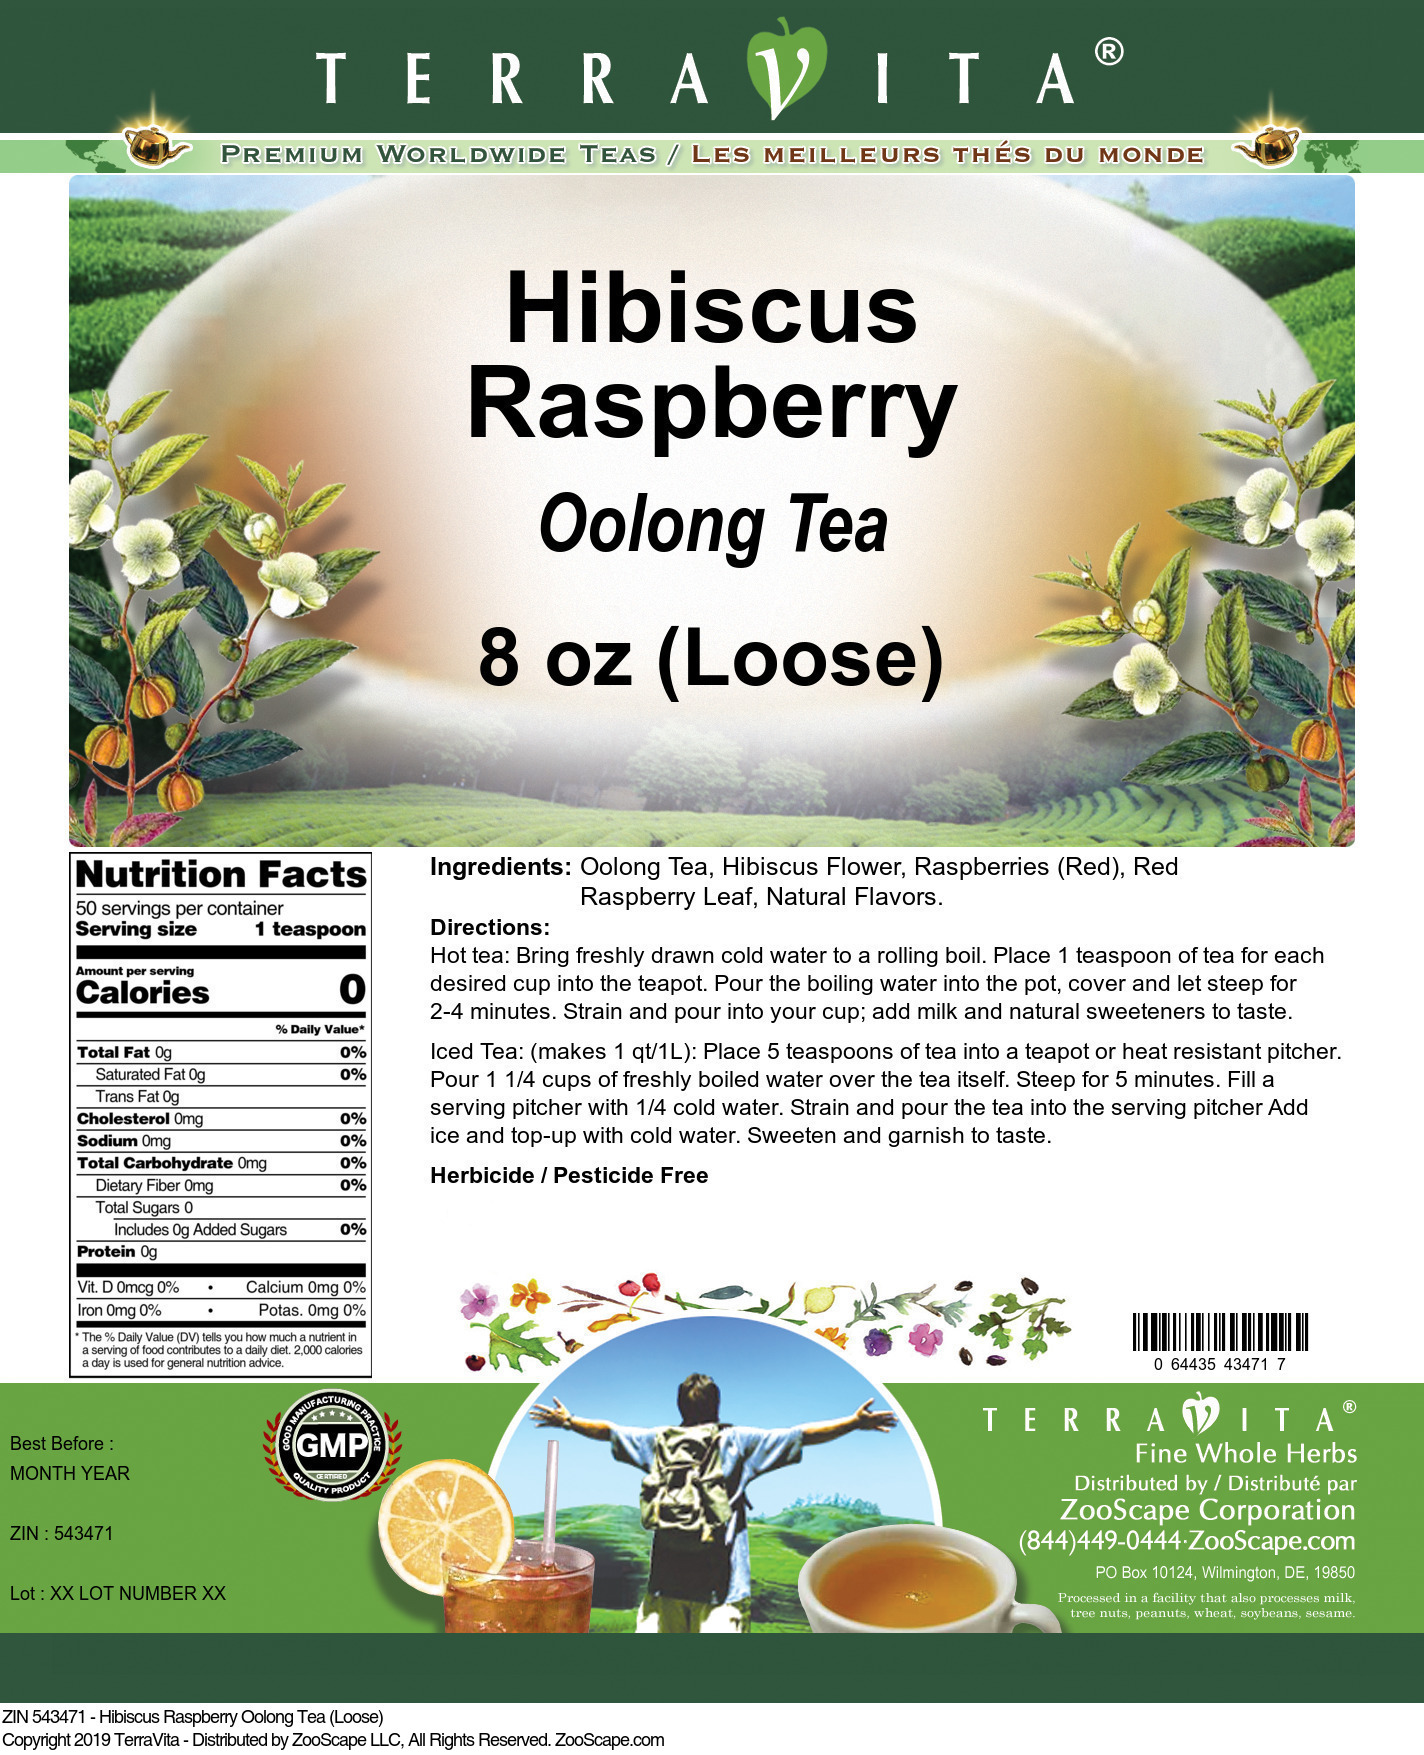 Hibiscus Raspberry Oolong Tea (Loose) - Label